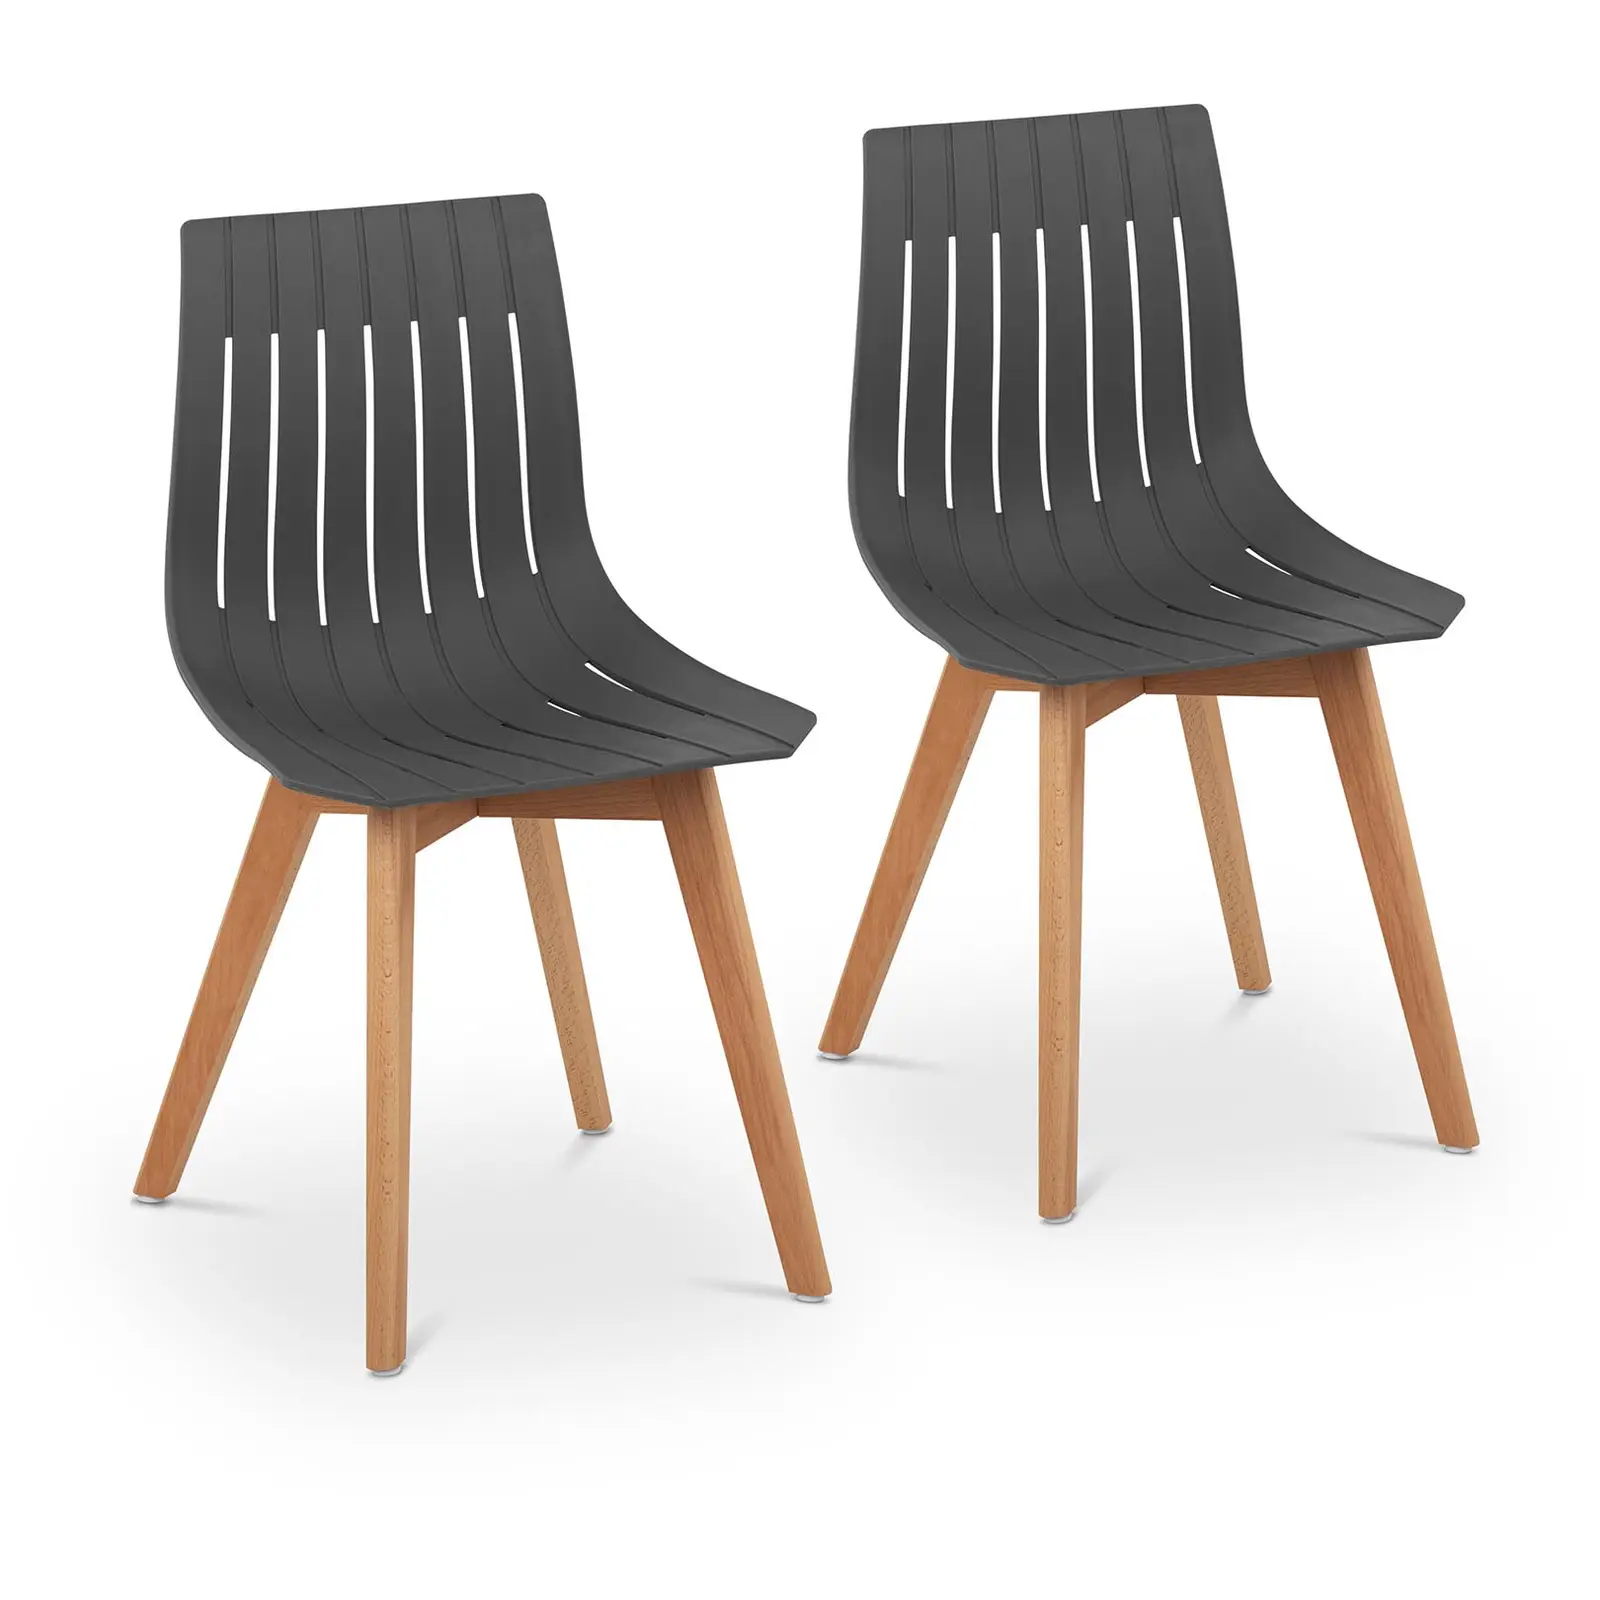 Kėdė - 2 vnt. rinkinys - iki 150 kg - sėdynės matmenys: 50 x 47 cm - pilka